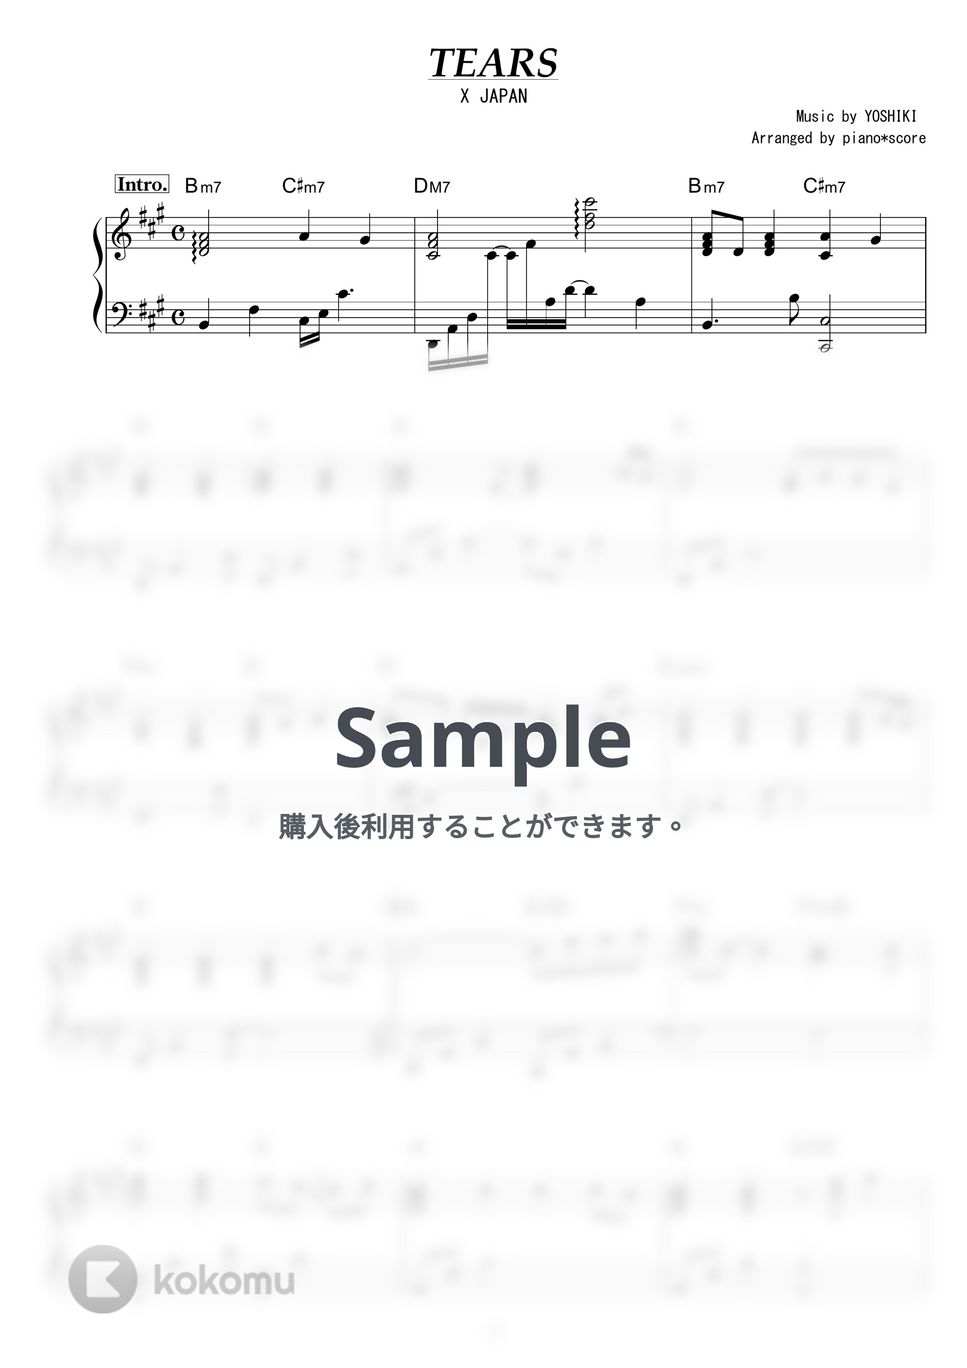 X JAPAN - TEARS (YOSHIKI) by piano*score